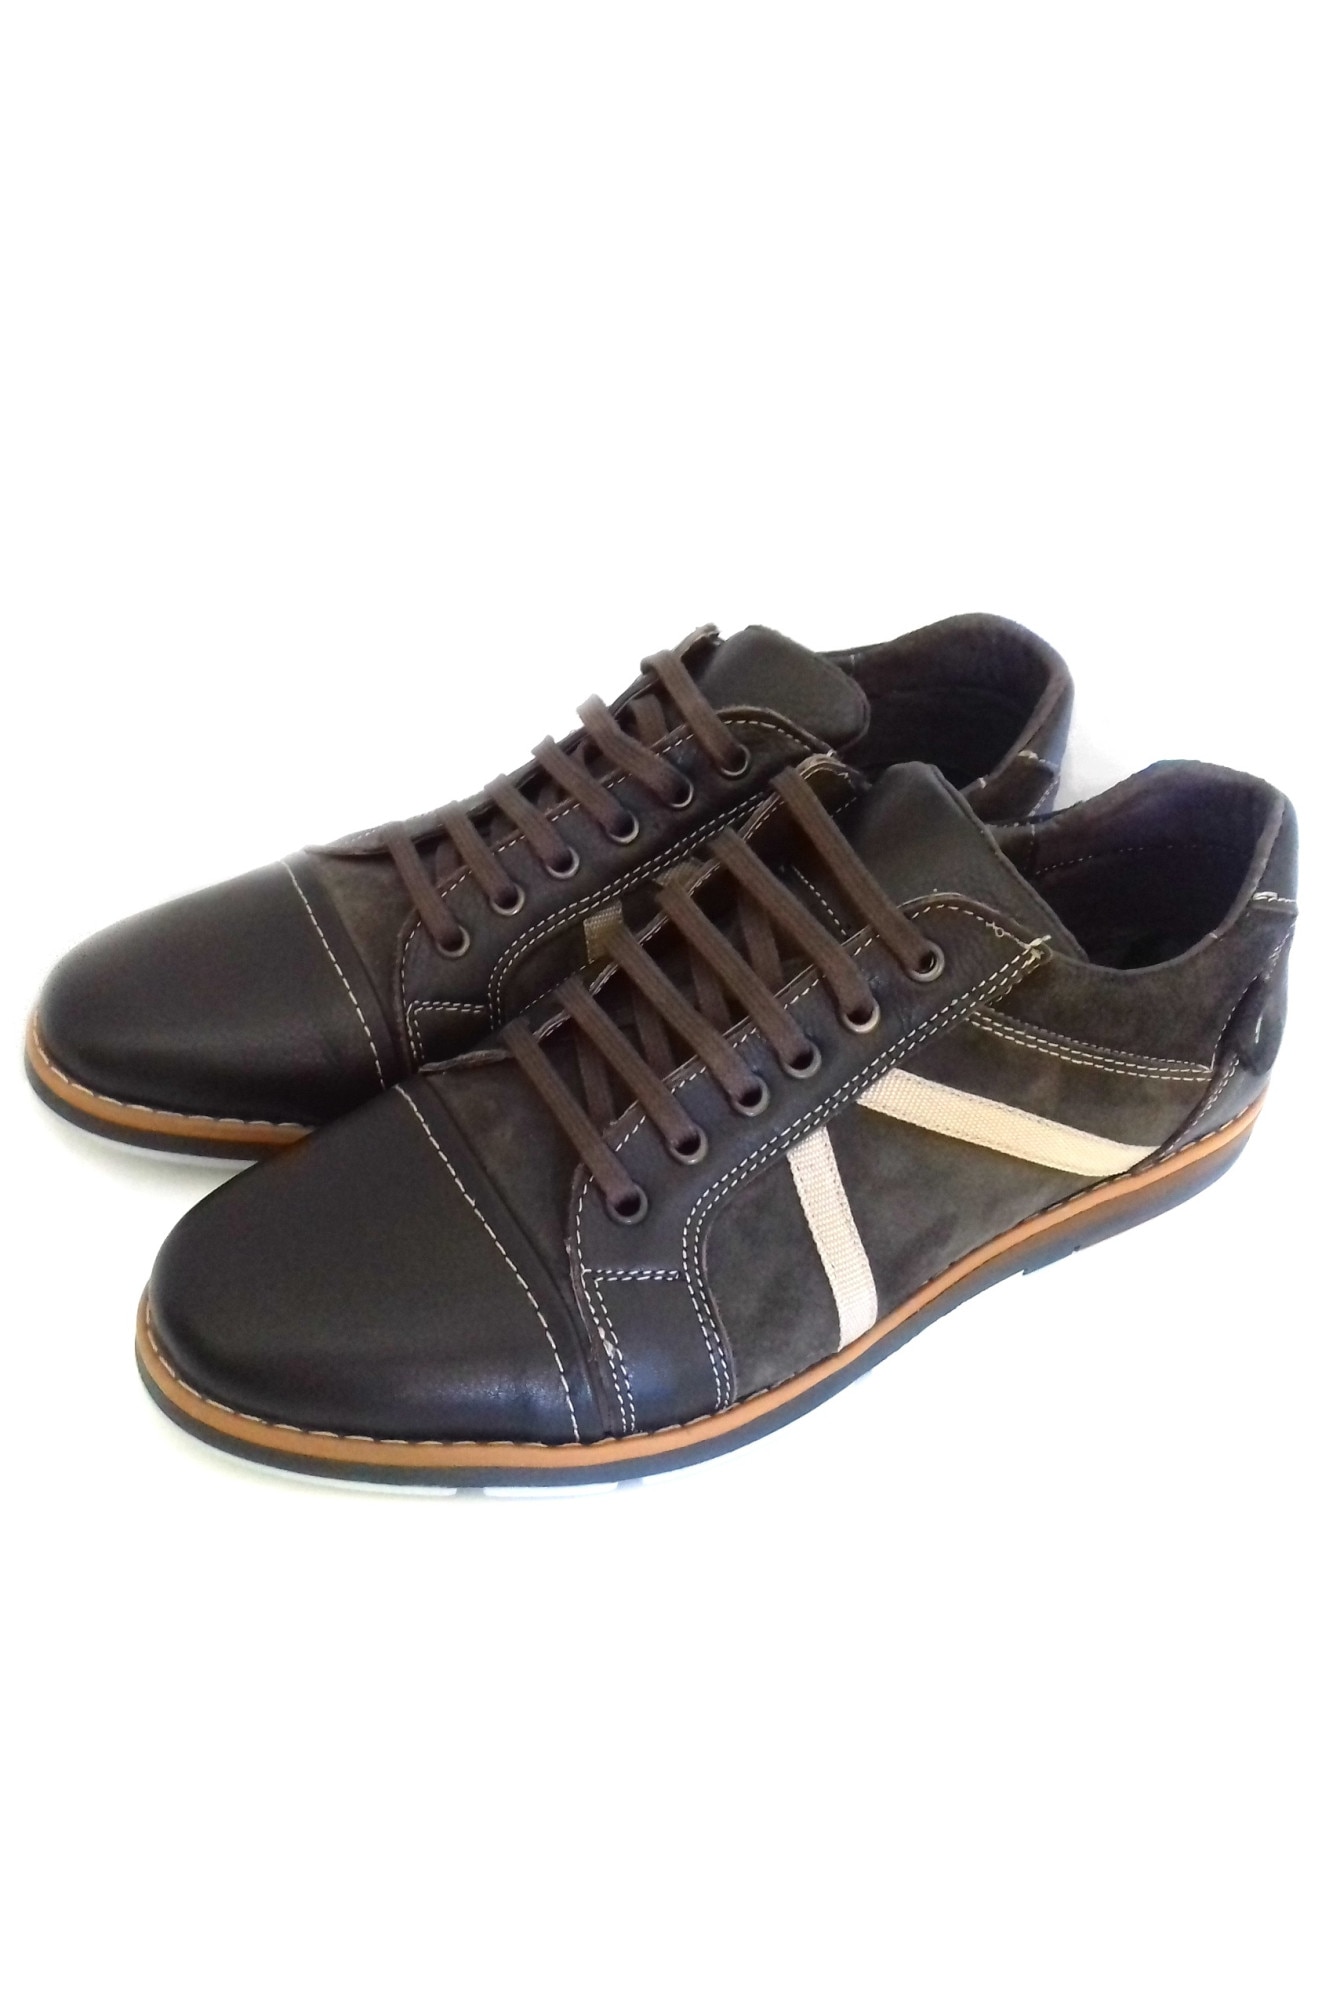 Pantofi sport Covi Star, model 56 - piele naturala, maime 41 - eMAG.ro